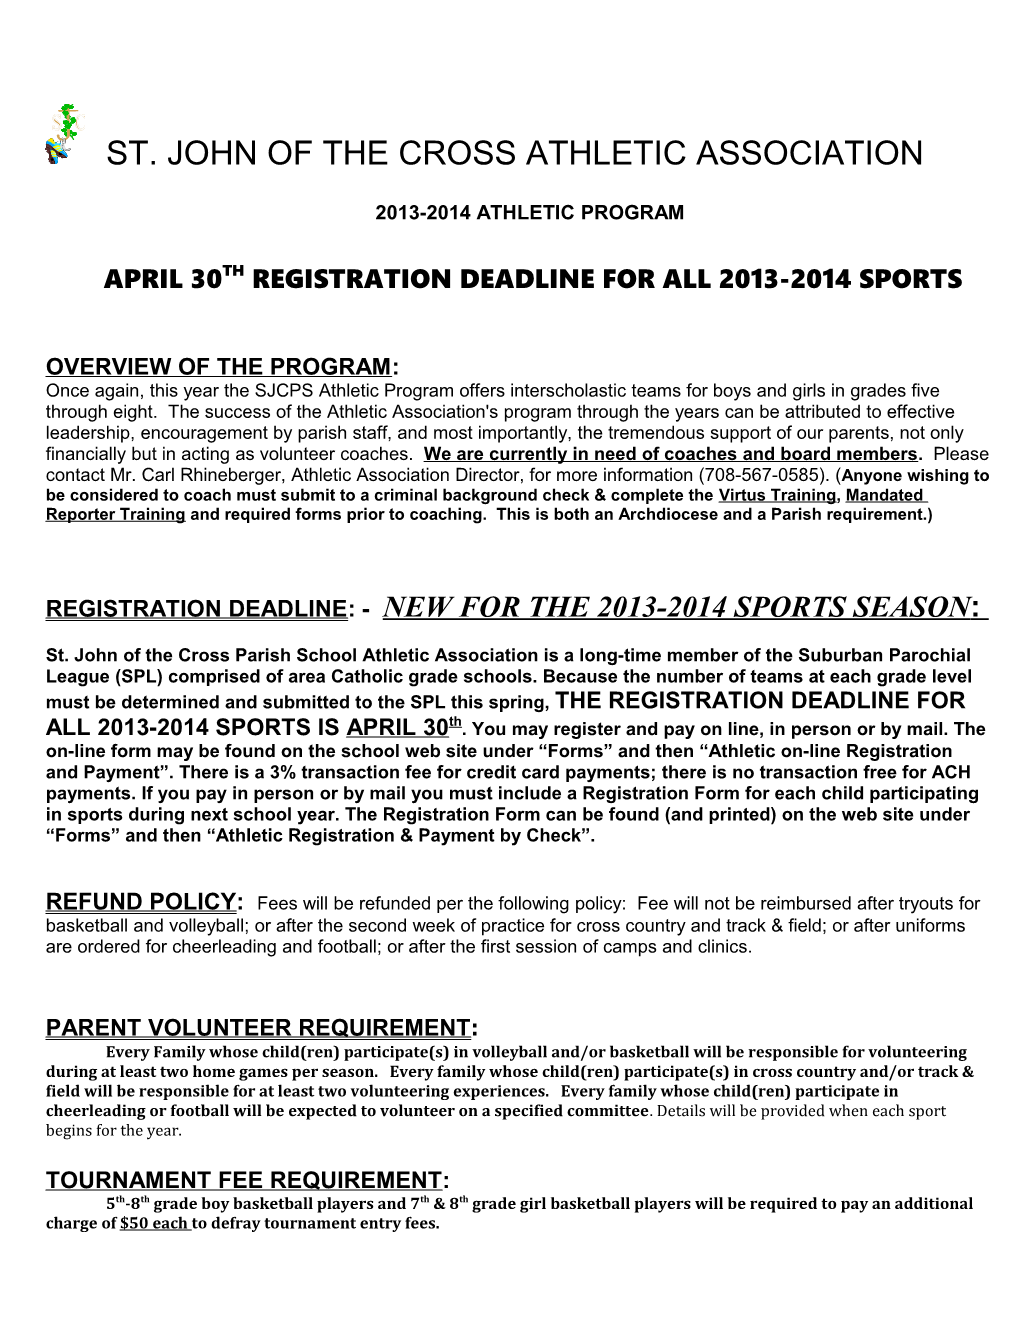 April 30Th Registration Deadline for All 2013-2014 Sports